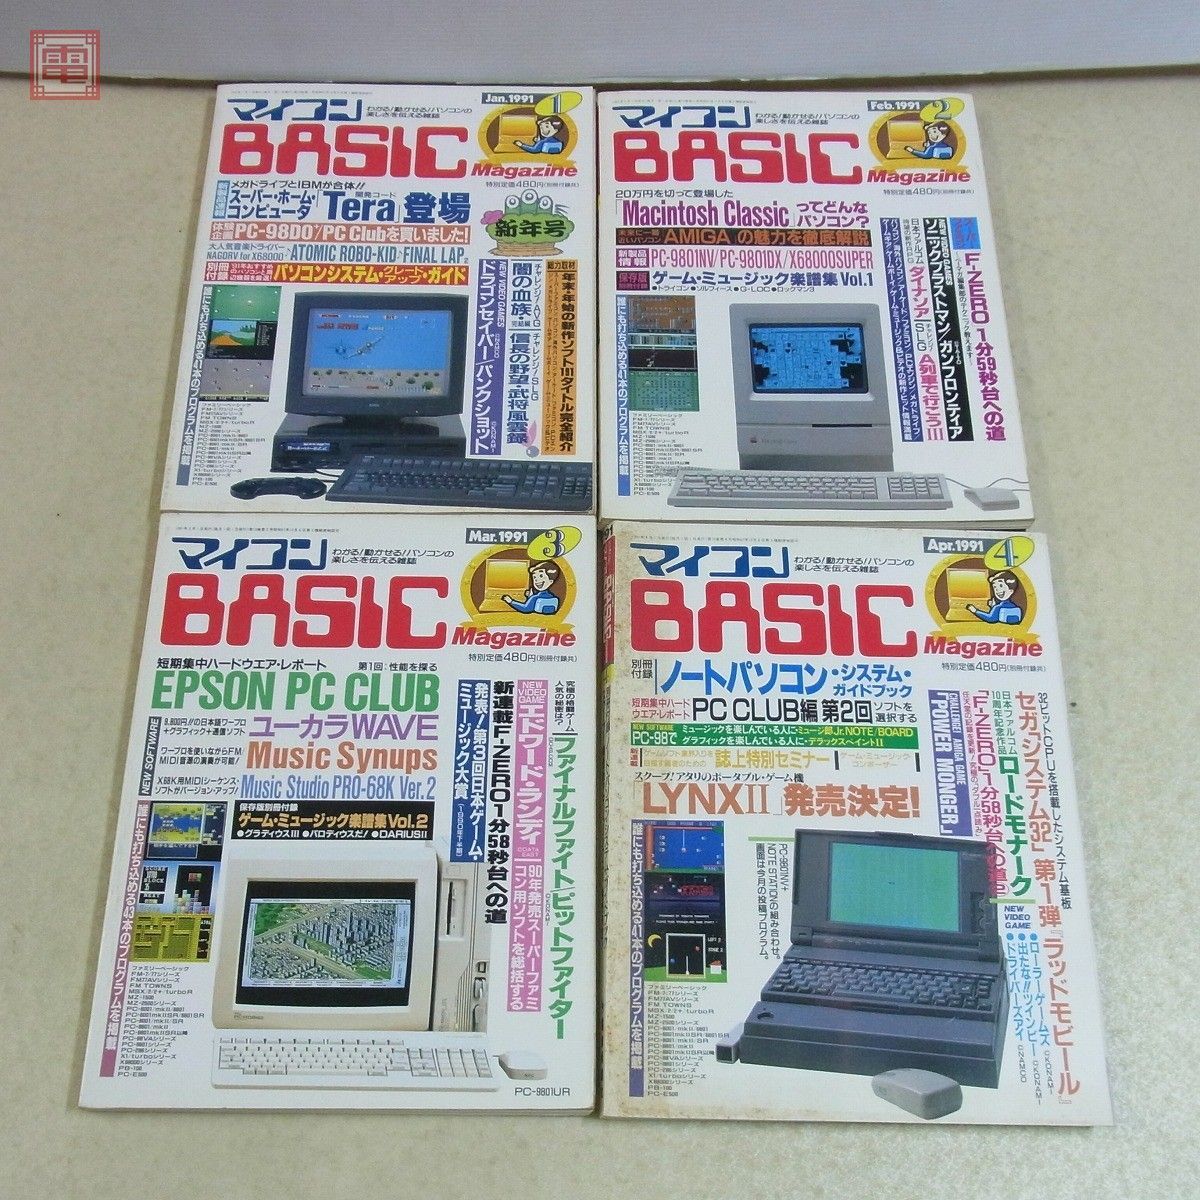  журнал microcomputer BASIC журнал 1991 год 12 шт. комплект через год .. беж maga радиоволны газета фирма [20